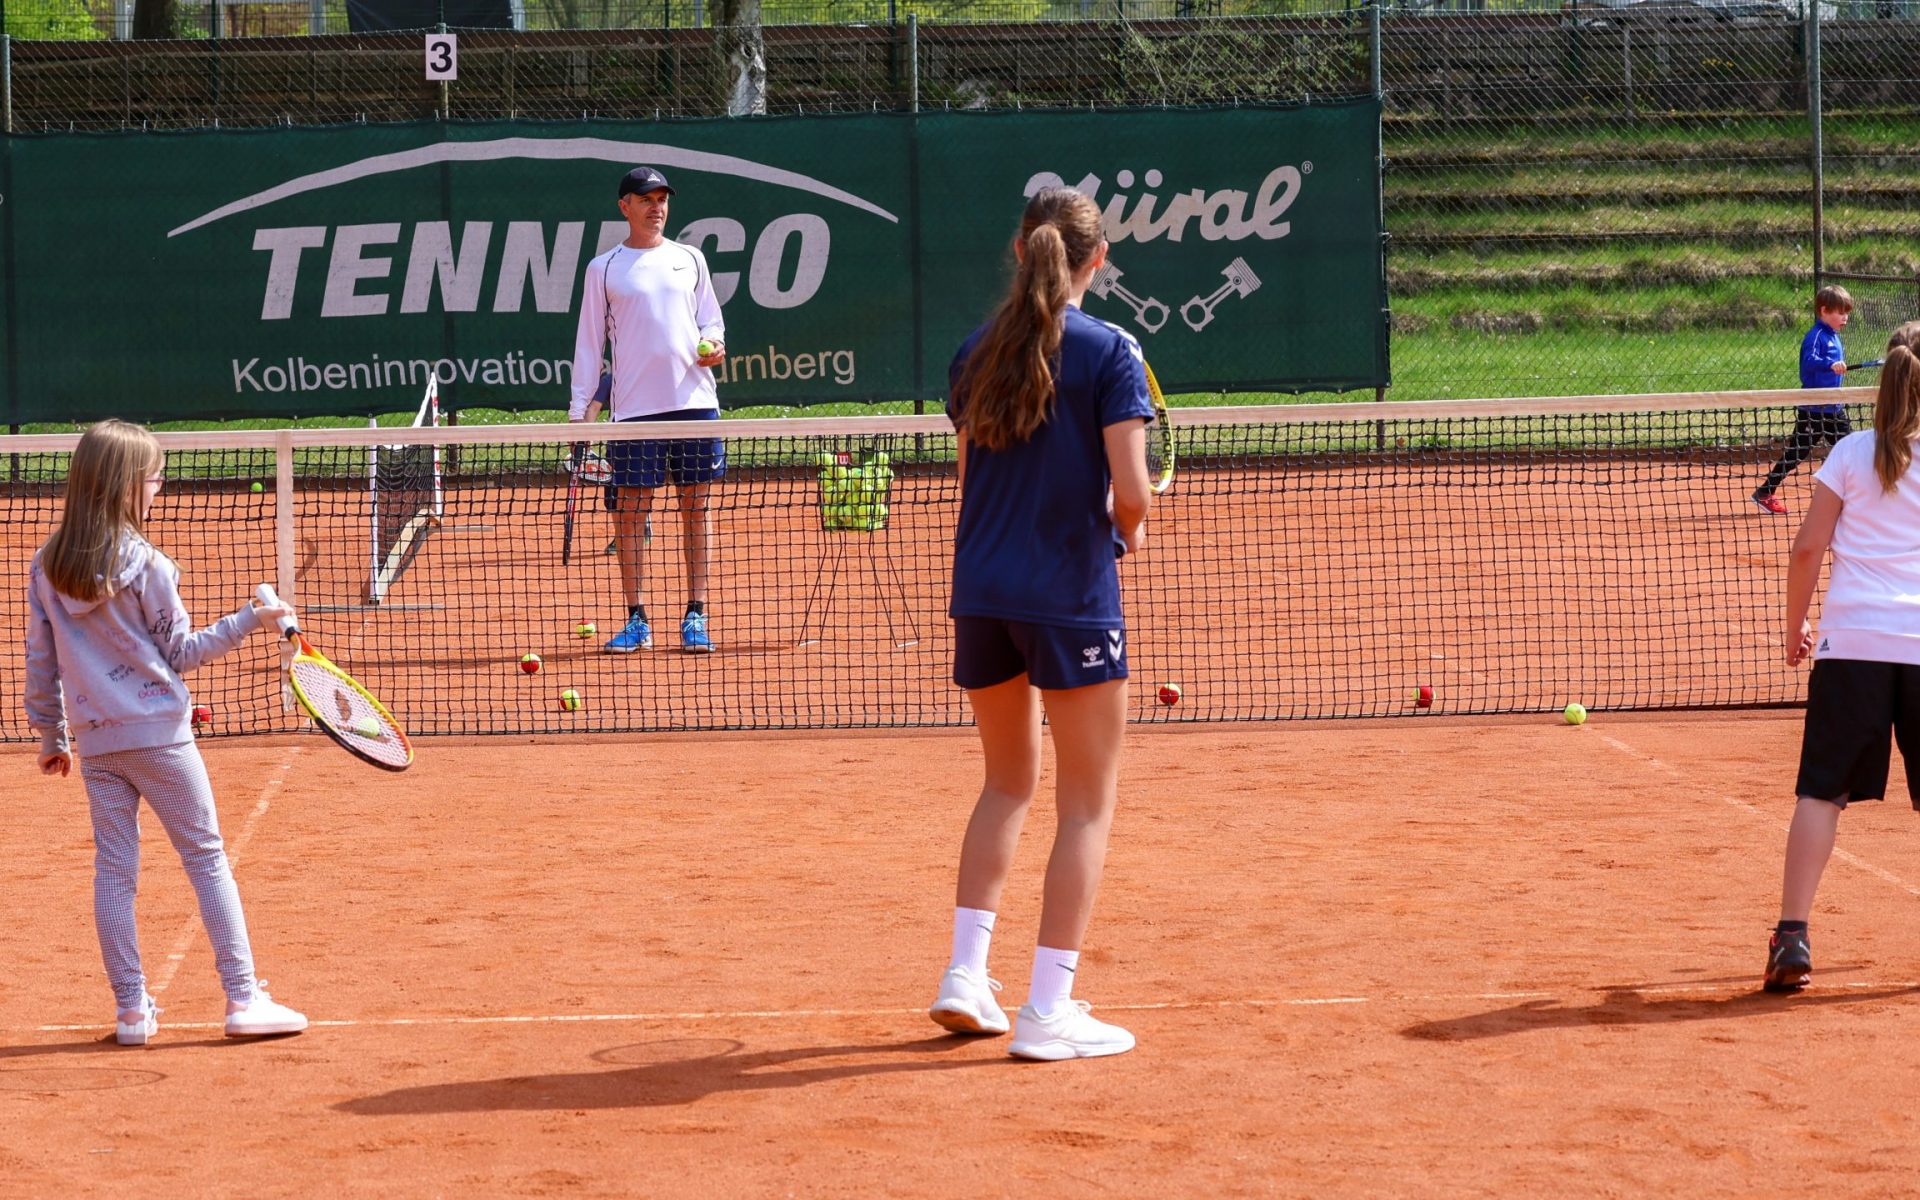 Tennis, Kinder, Jugendliche, Todor, Tennisschule, Camp, Adriana Barna